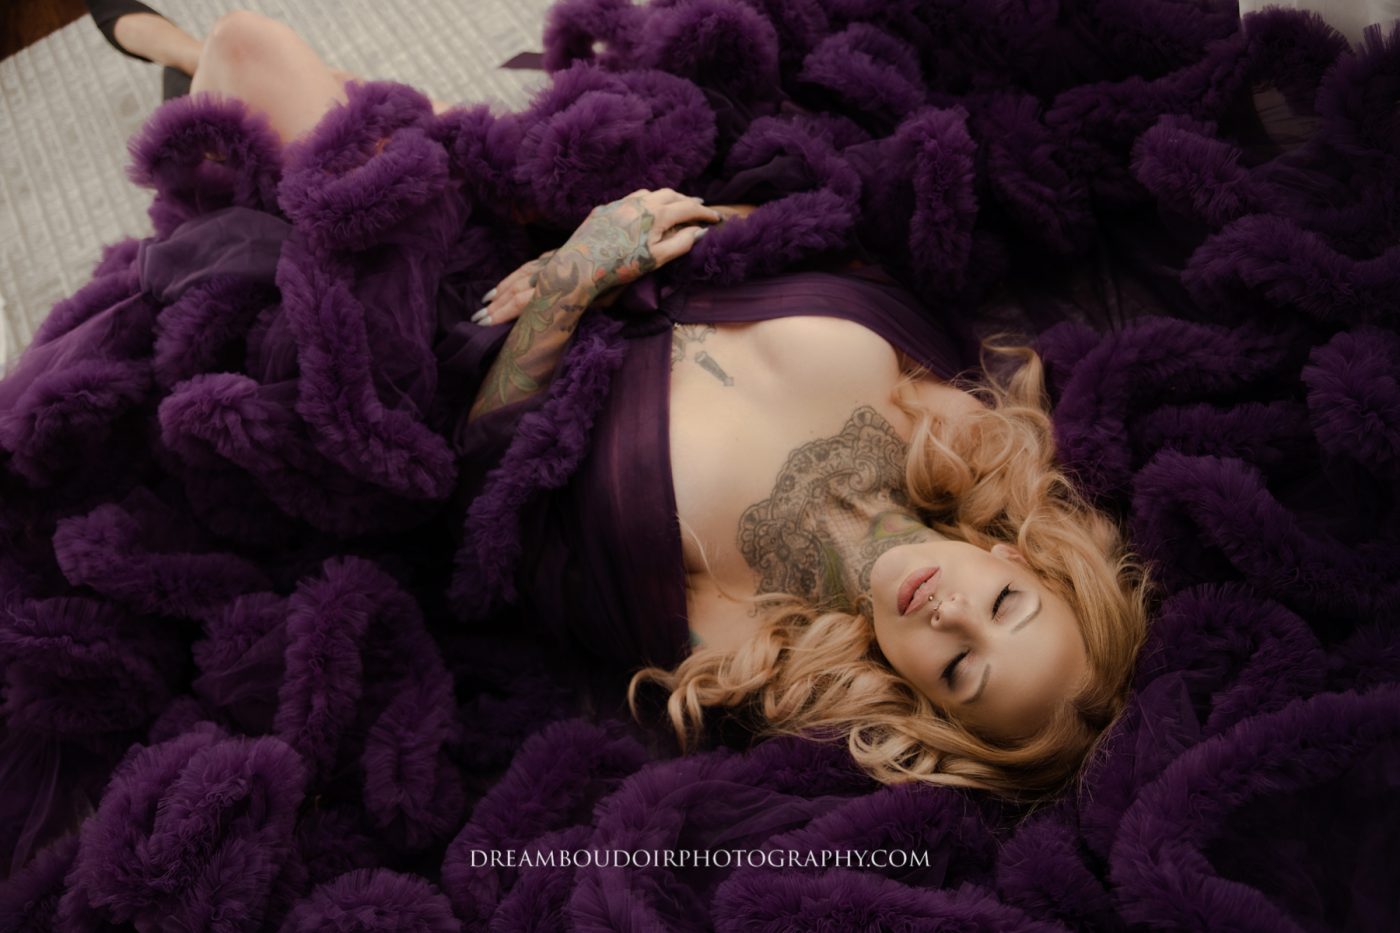 Dream Boudoir Photography – Toronto & Vancouver for Women